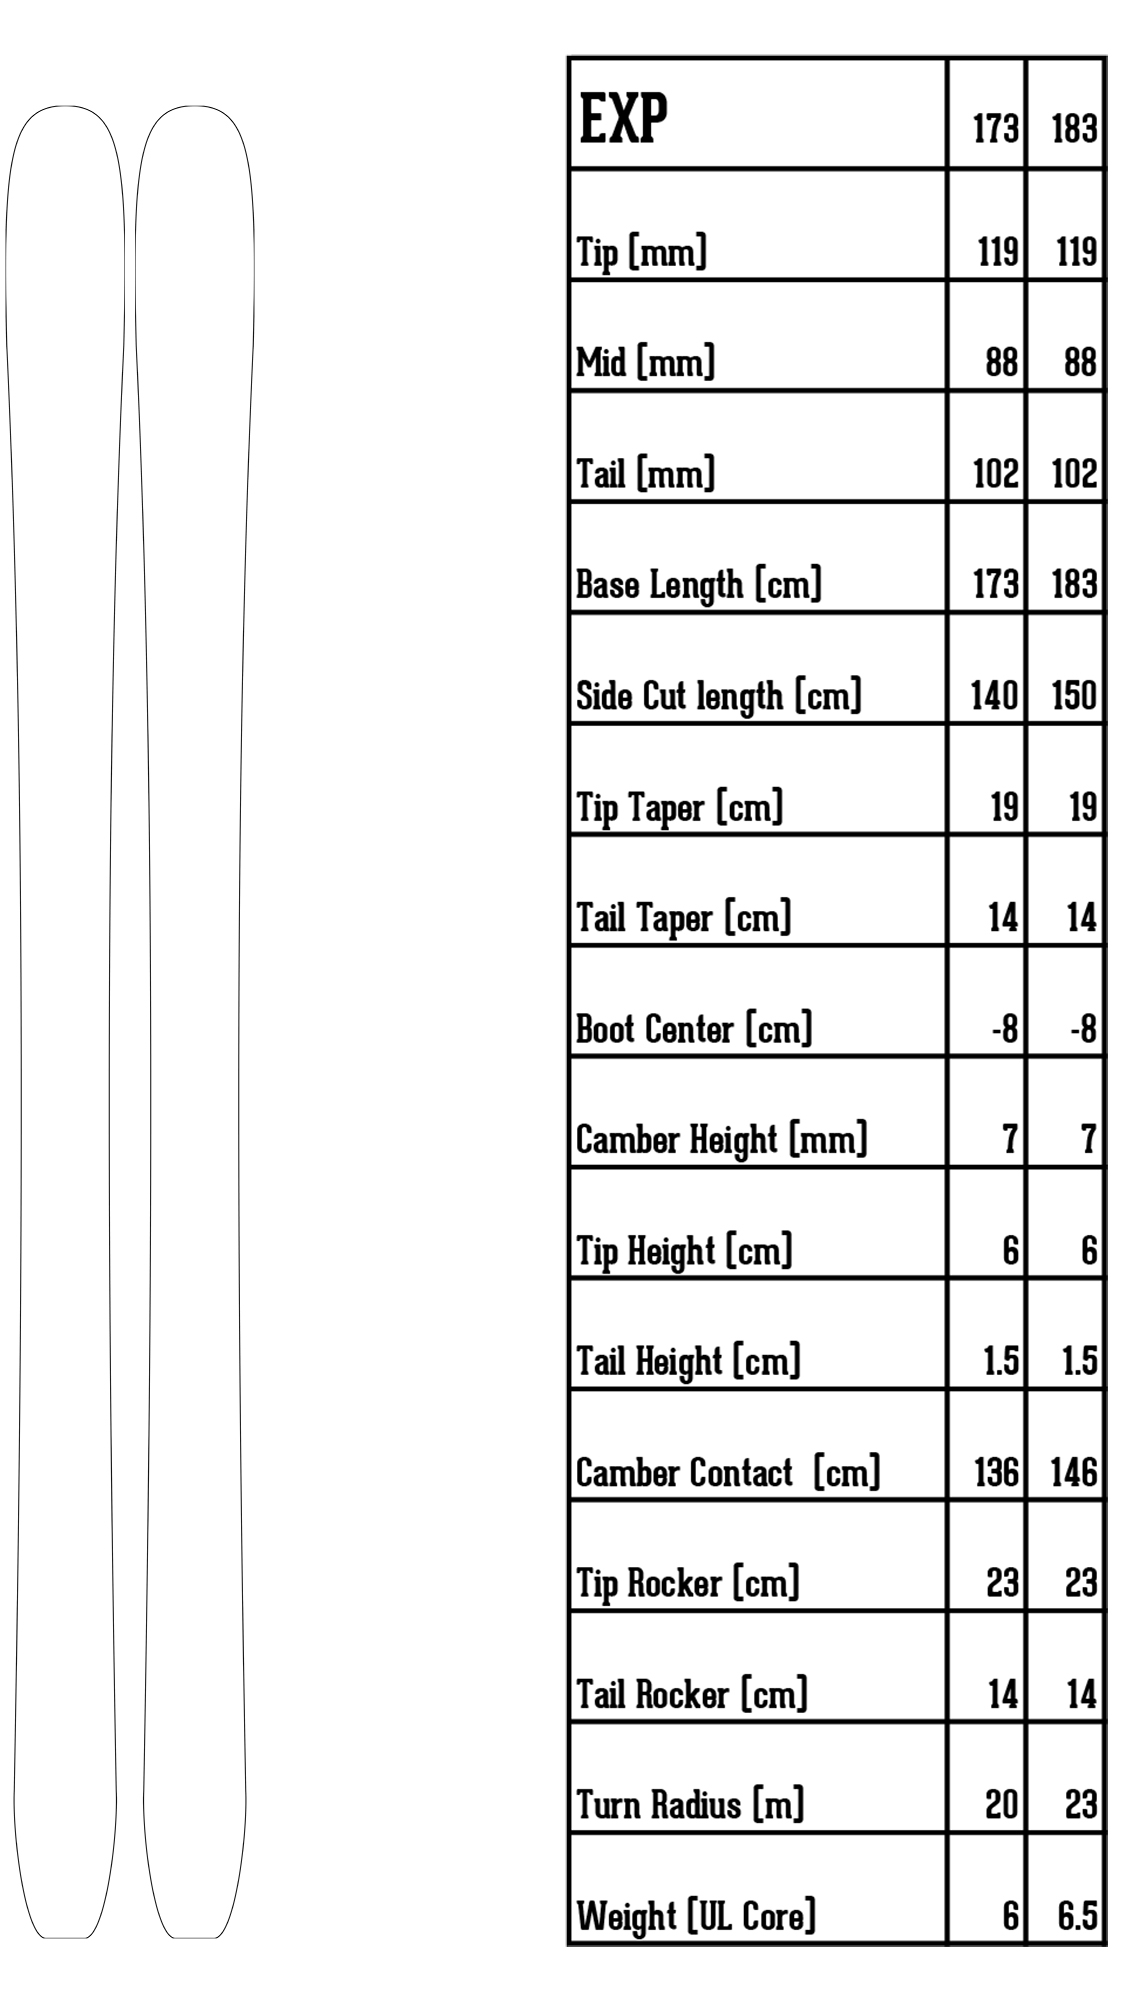 EXP ski information spec sheet camber, tip height, rocker, camber contact, weight